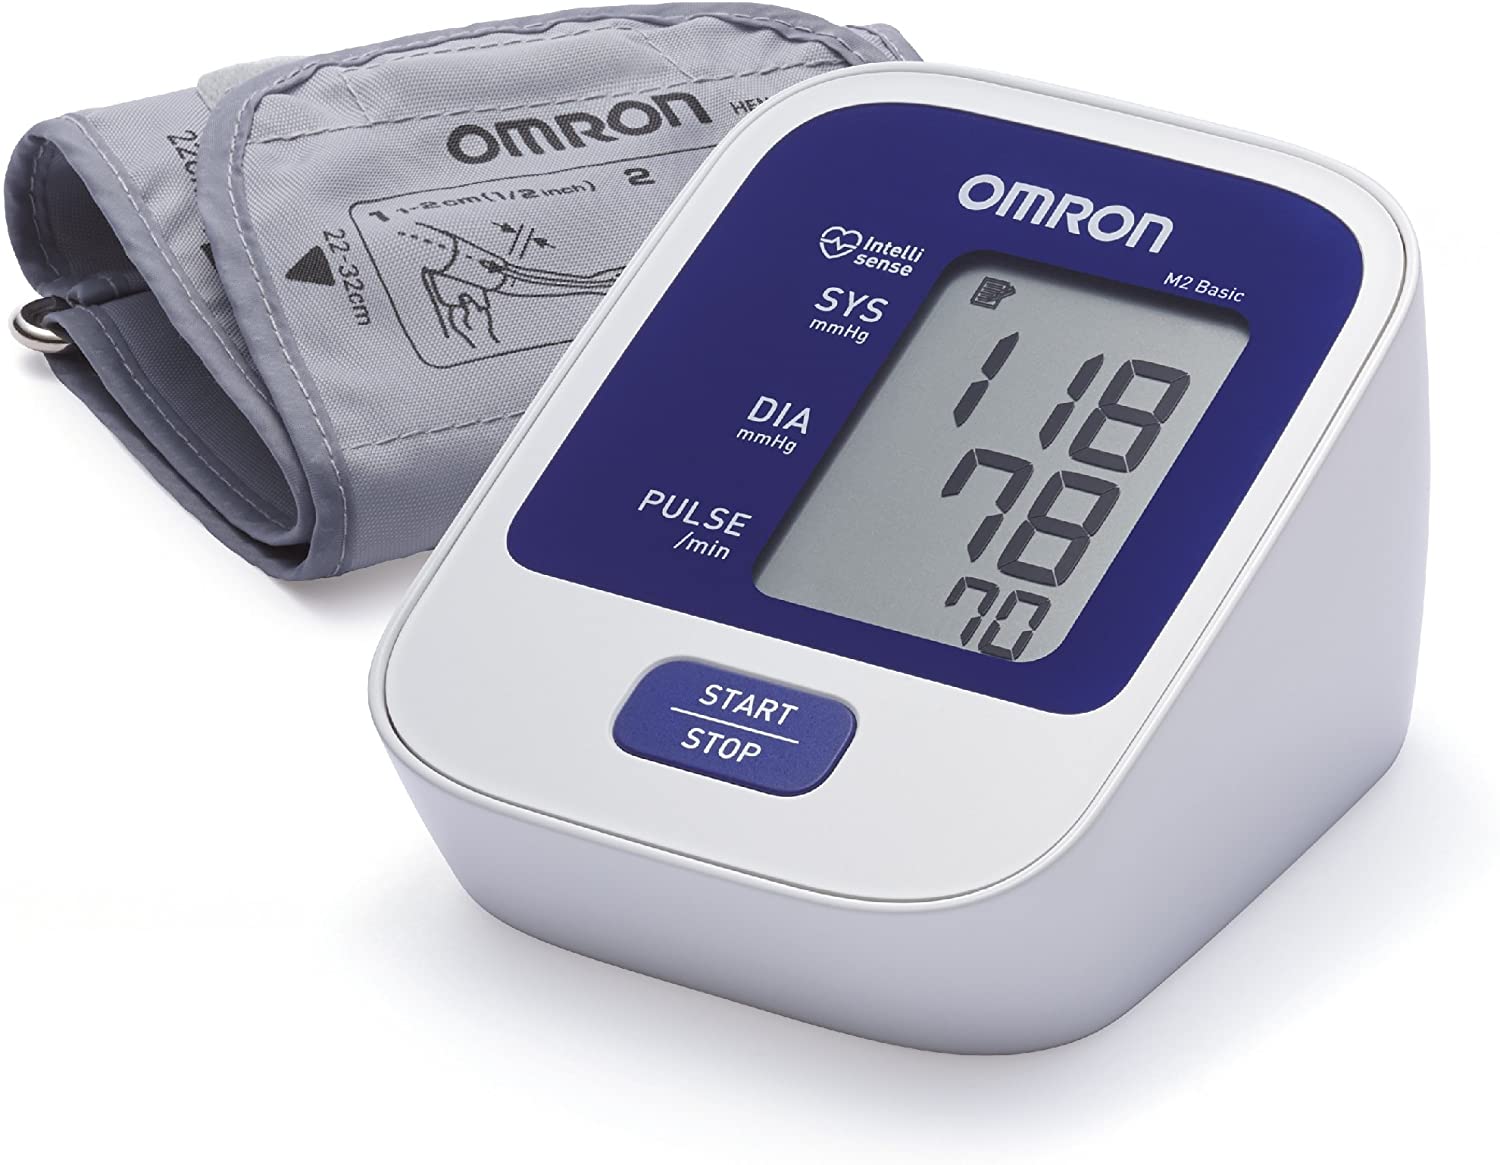 OMRON M2 Basic Upper arm blood pressure monitor